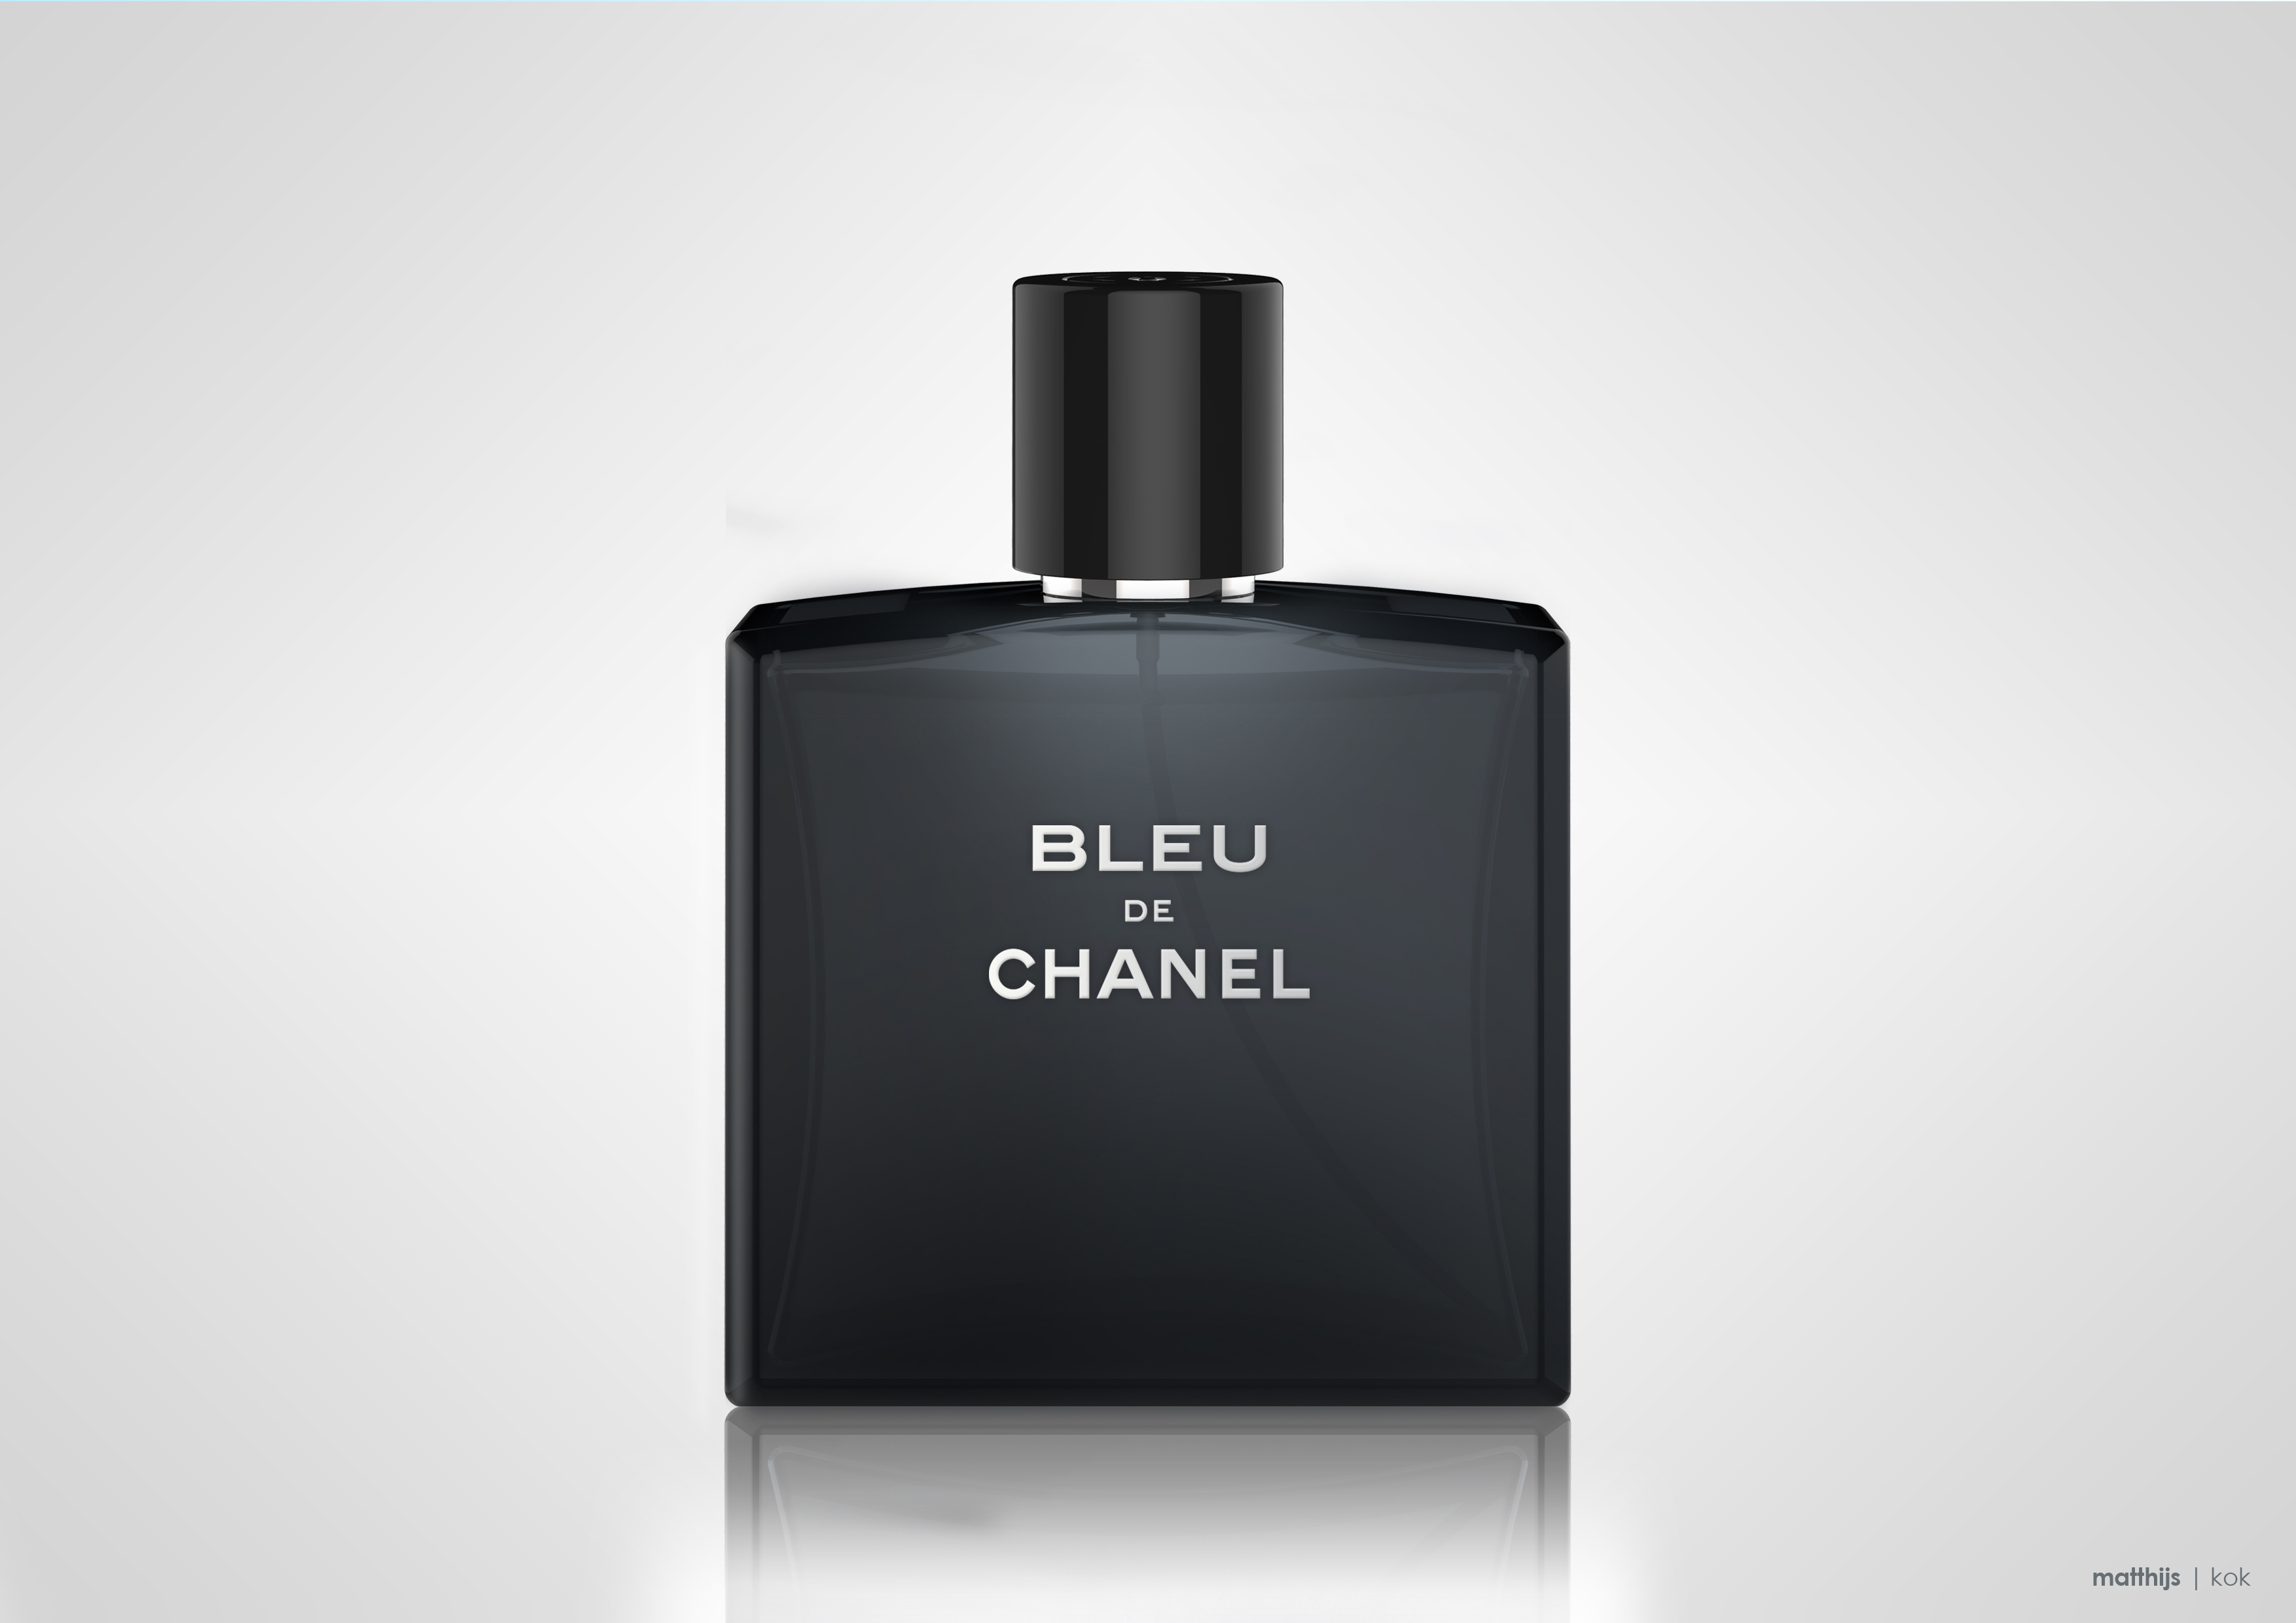 Bleu de Chanel | Rendering by Matthijs Kok